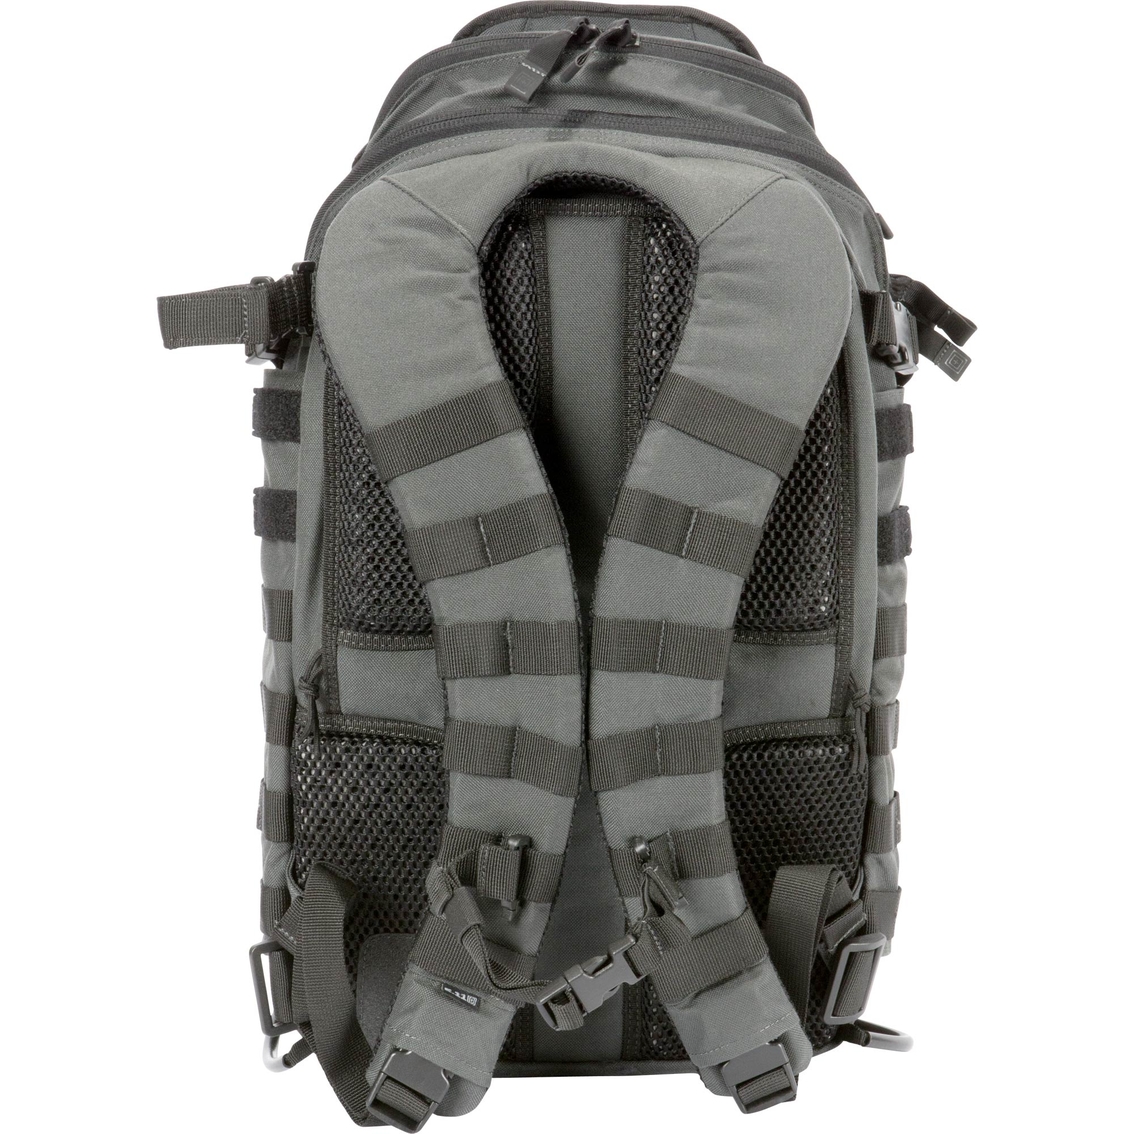 5.11 All Hazards Nitro Backpack - Image 2 of 4